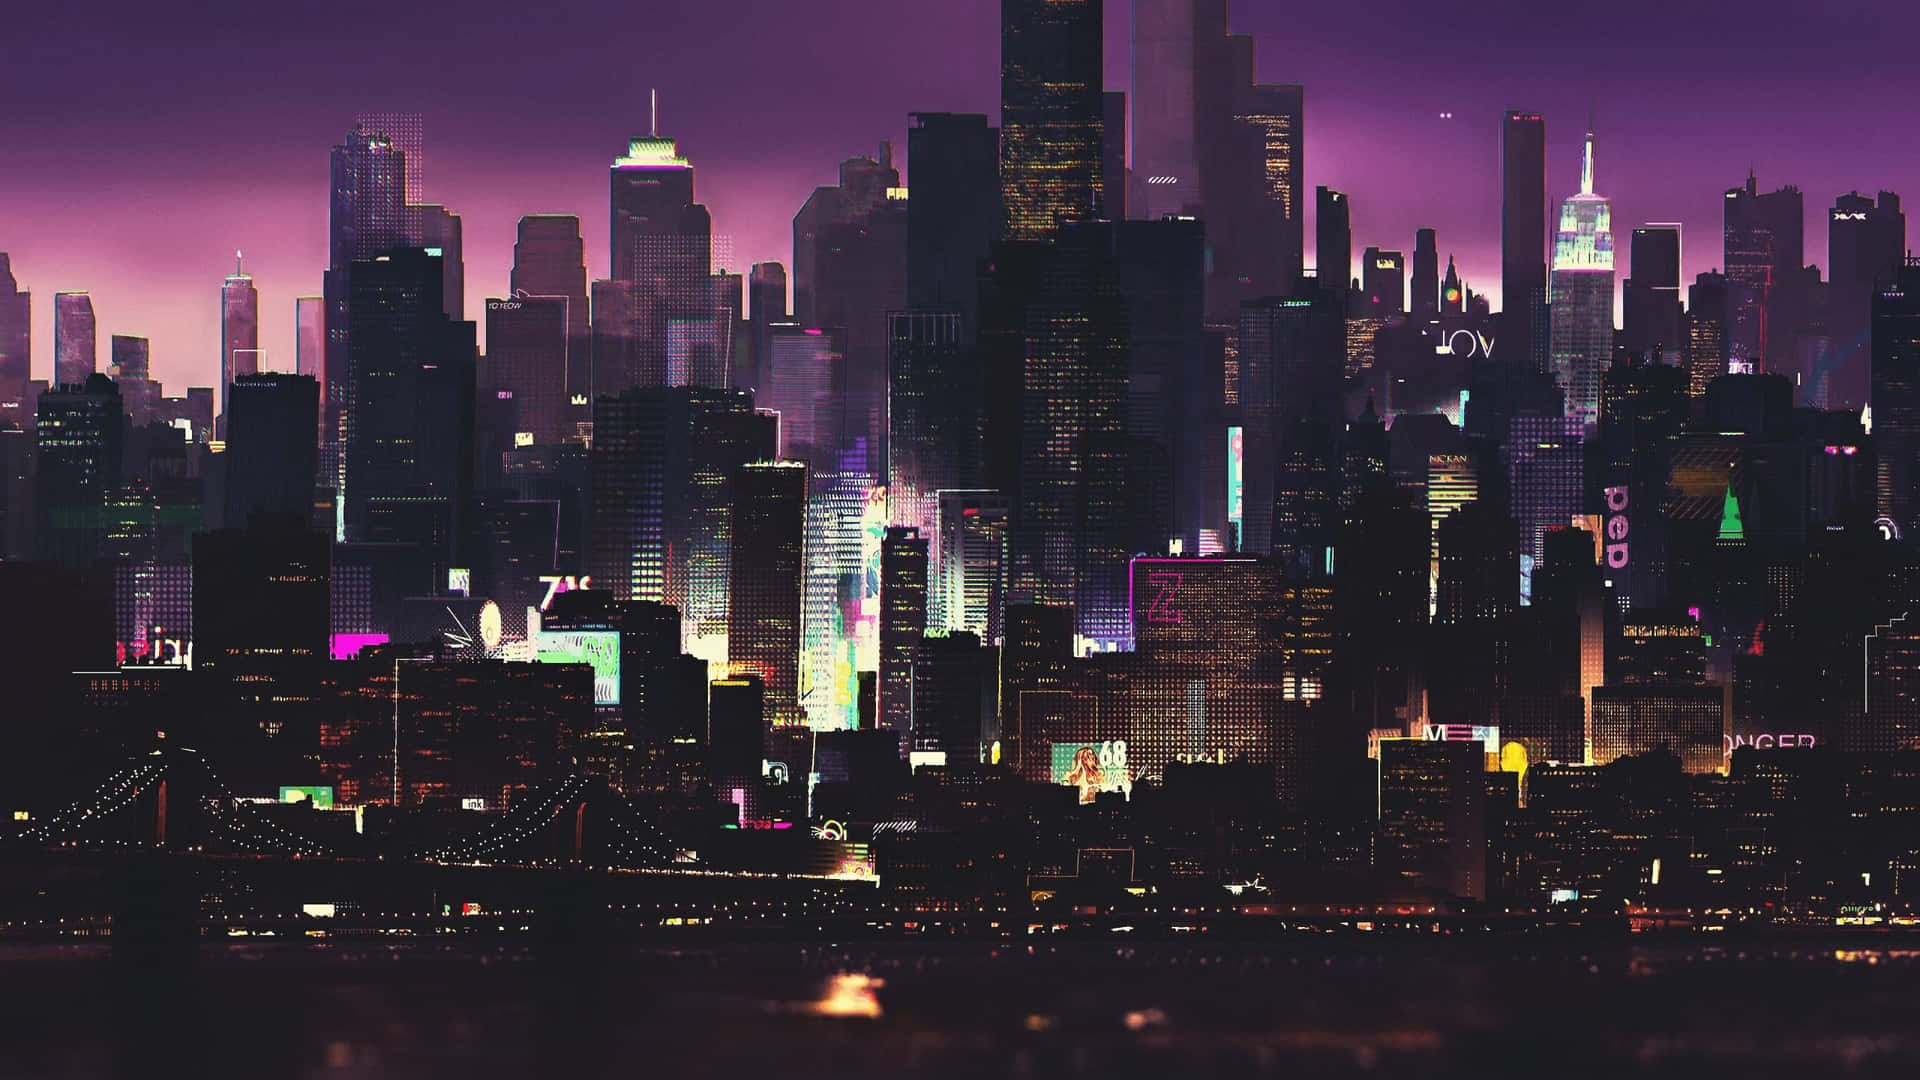 Neon lights sparkle to create an immersive cyberpunk night cityscape Wallpaper